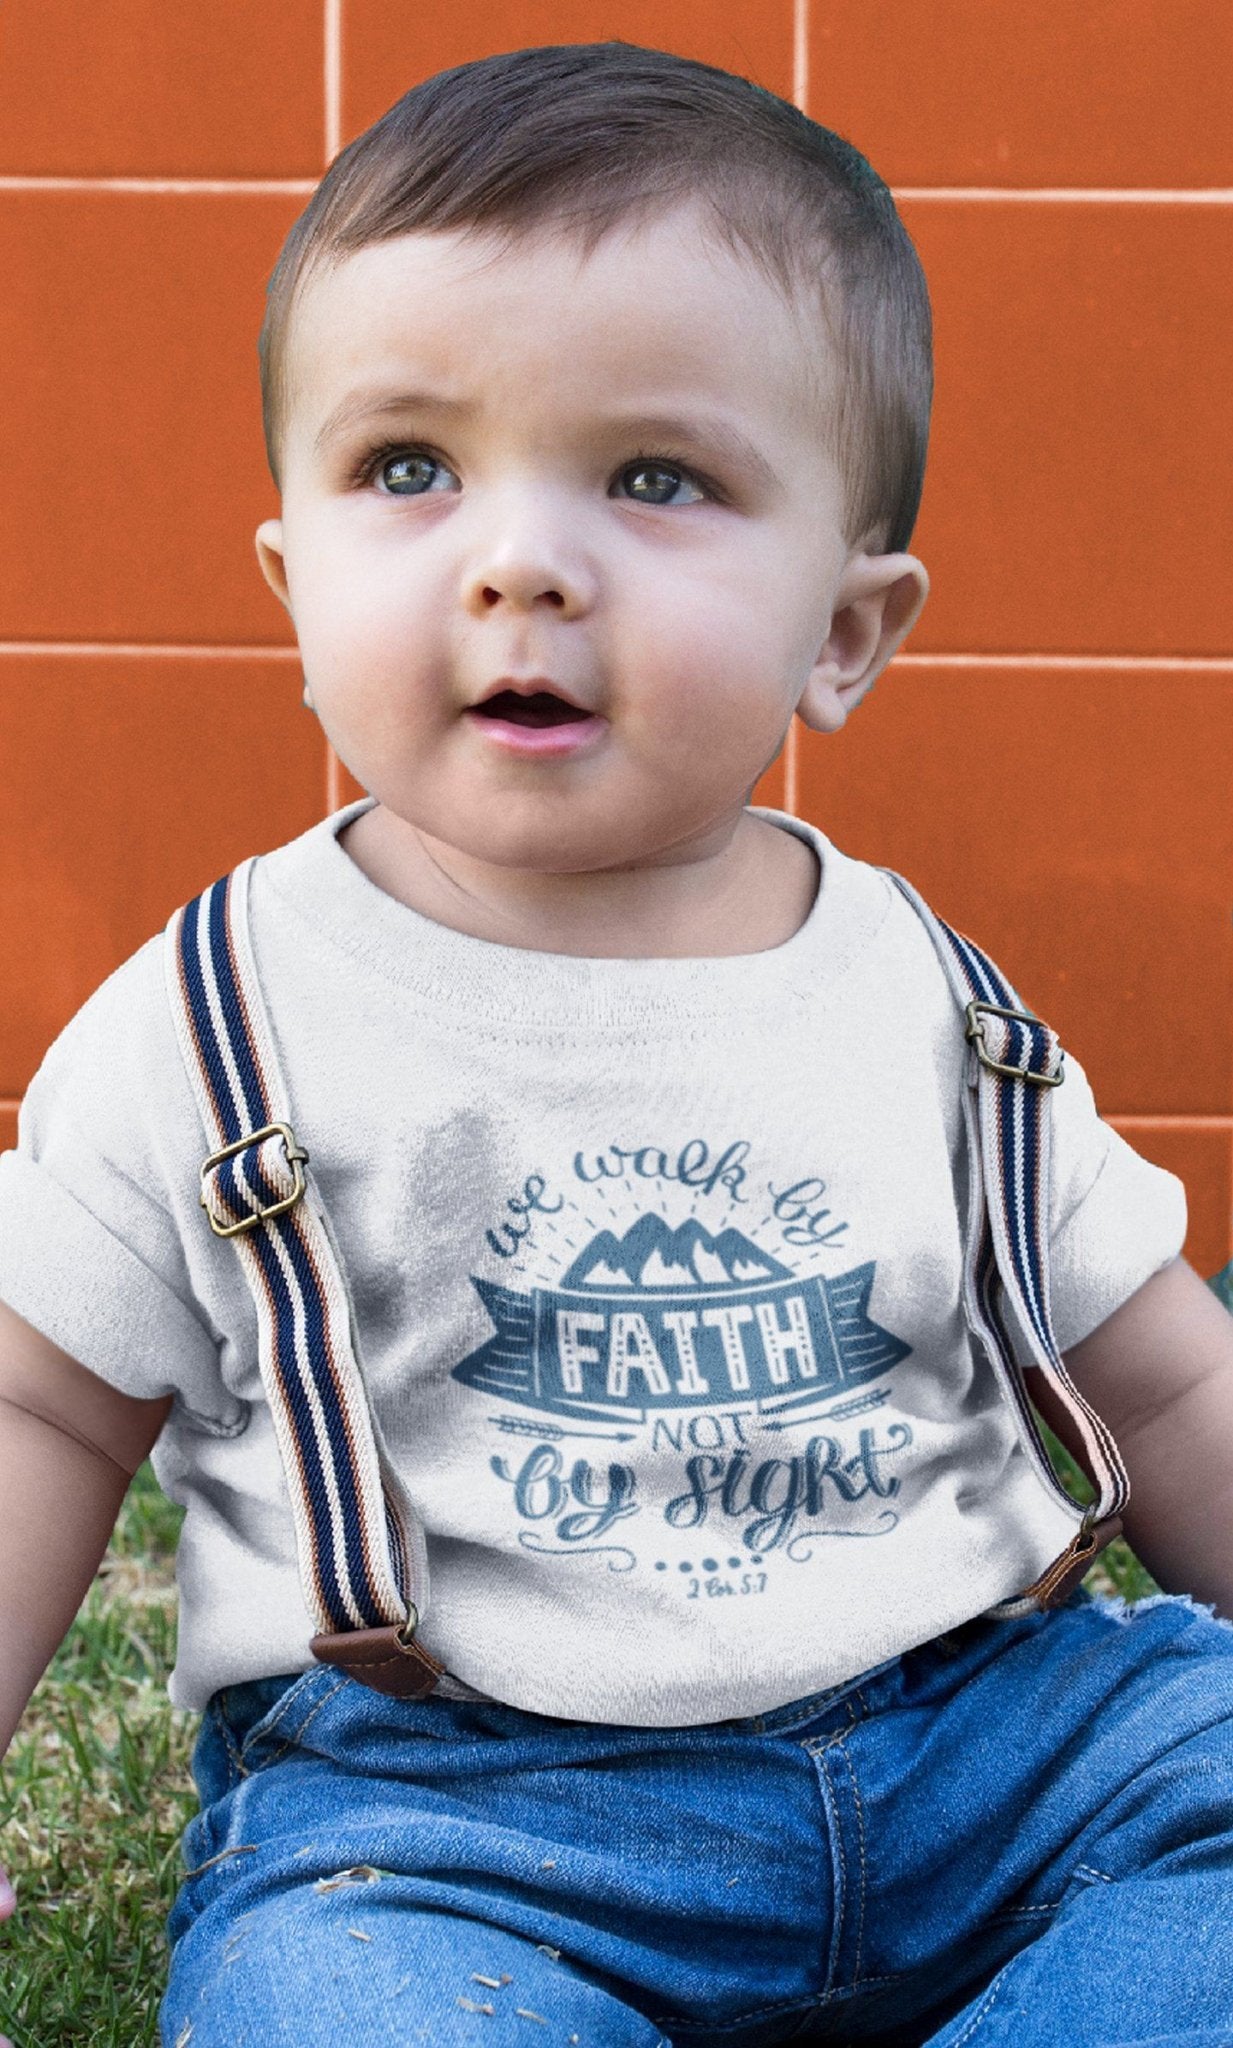 Walk By Faith - Baby’s T - Trini-T Ministries